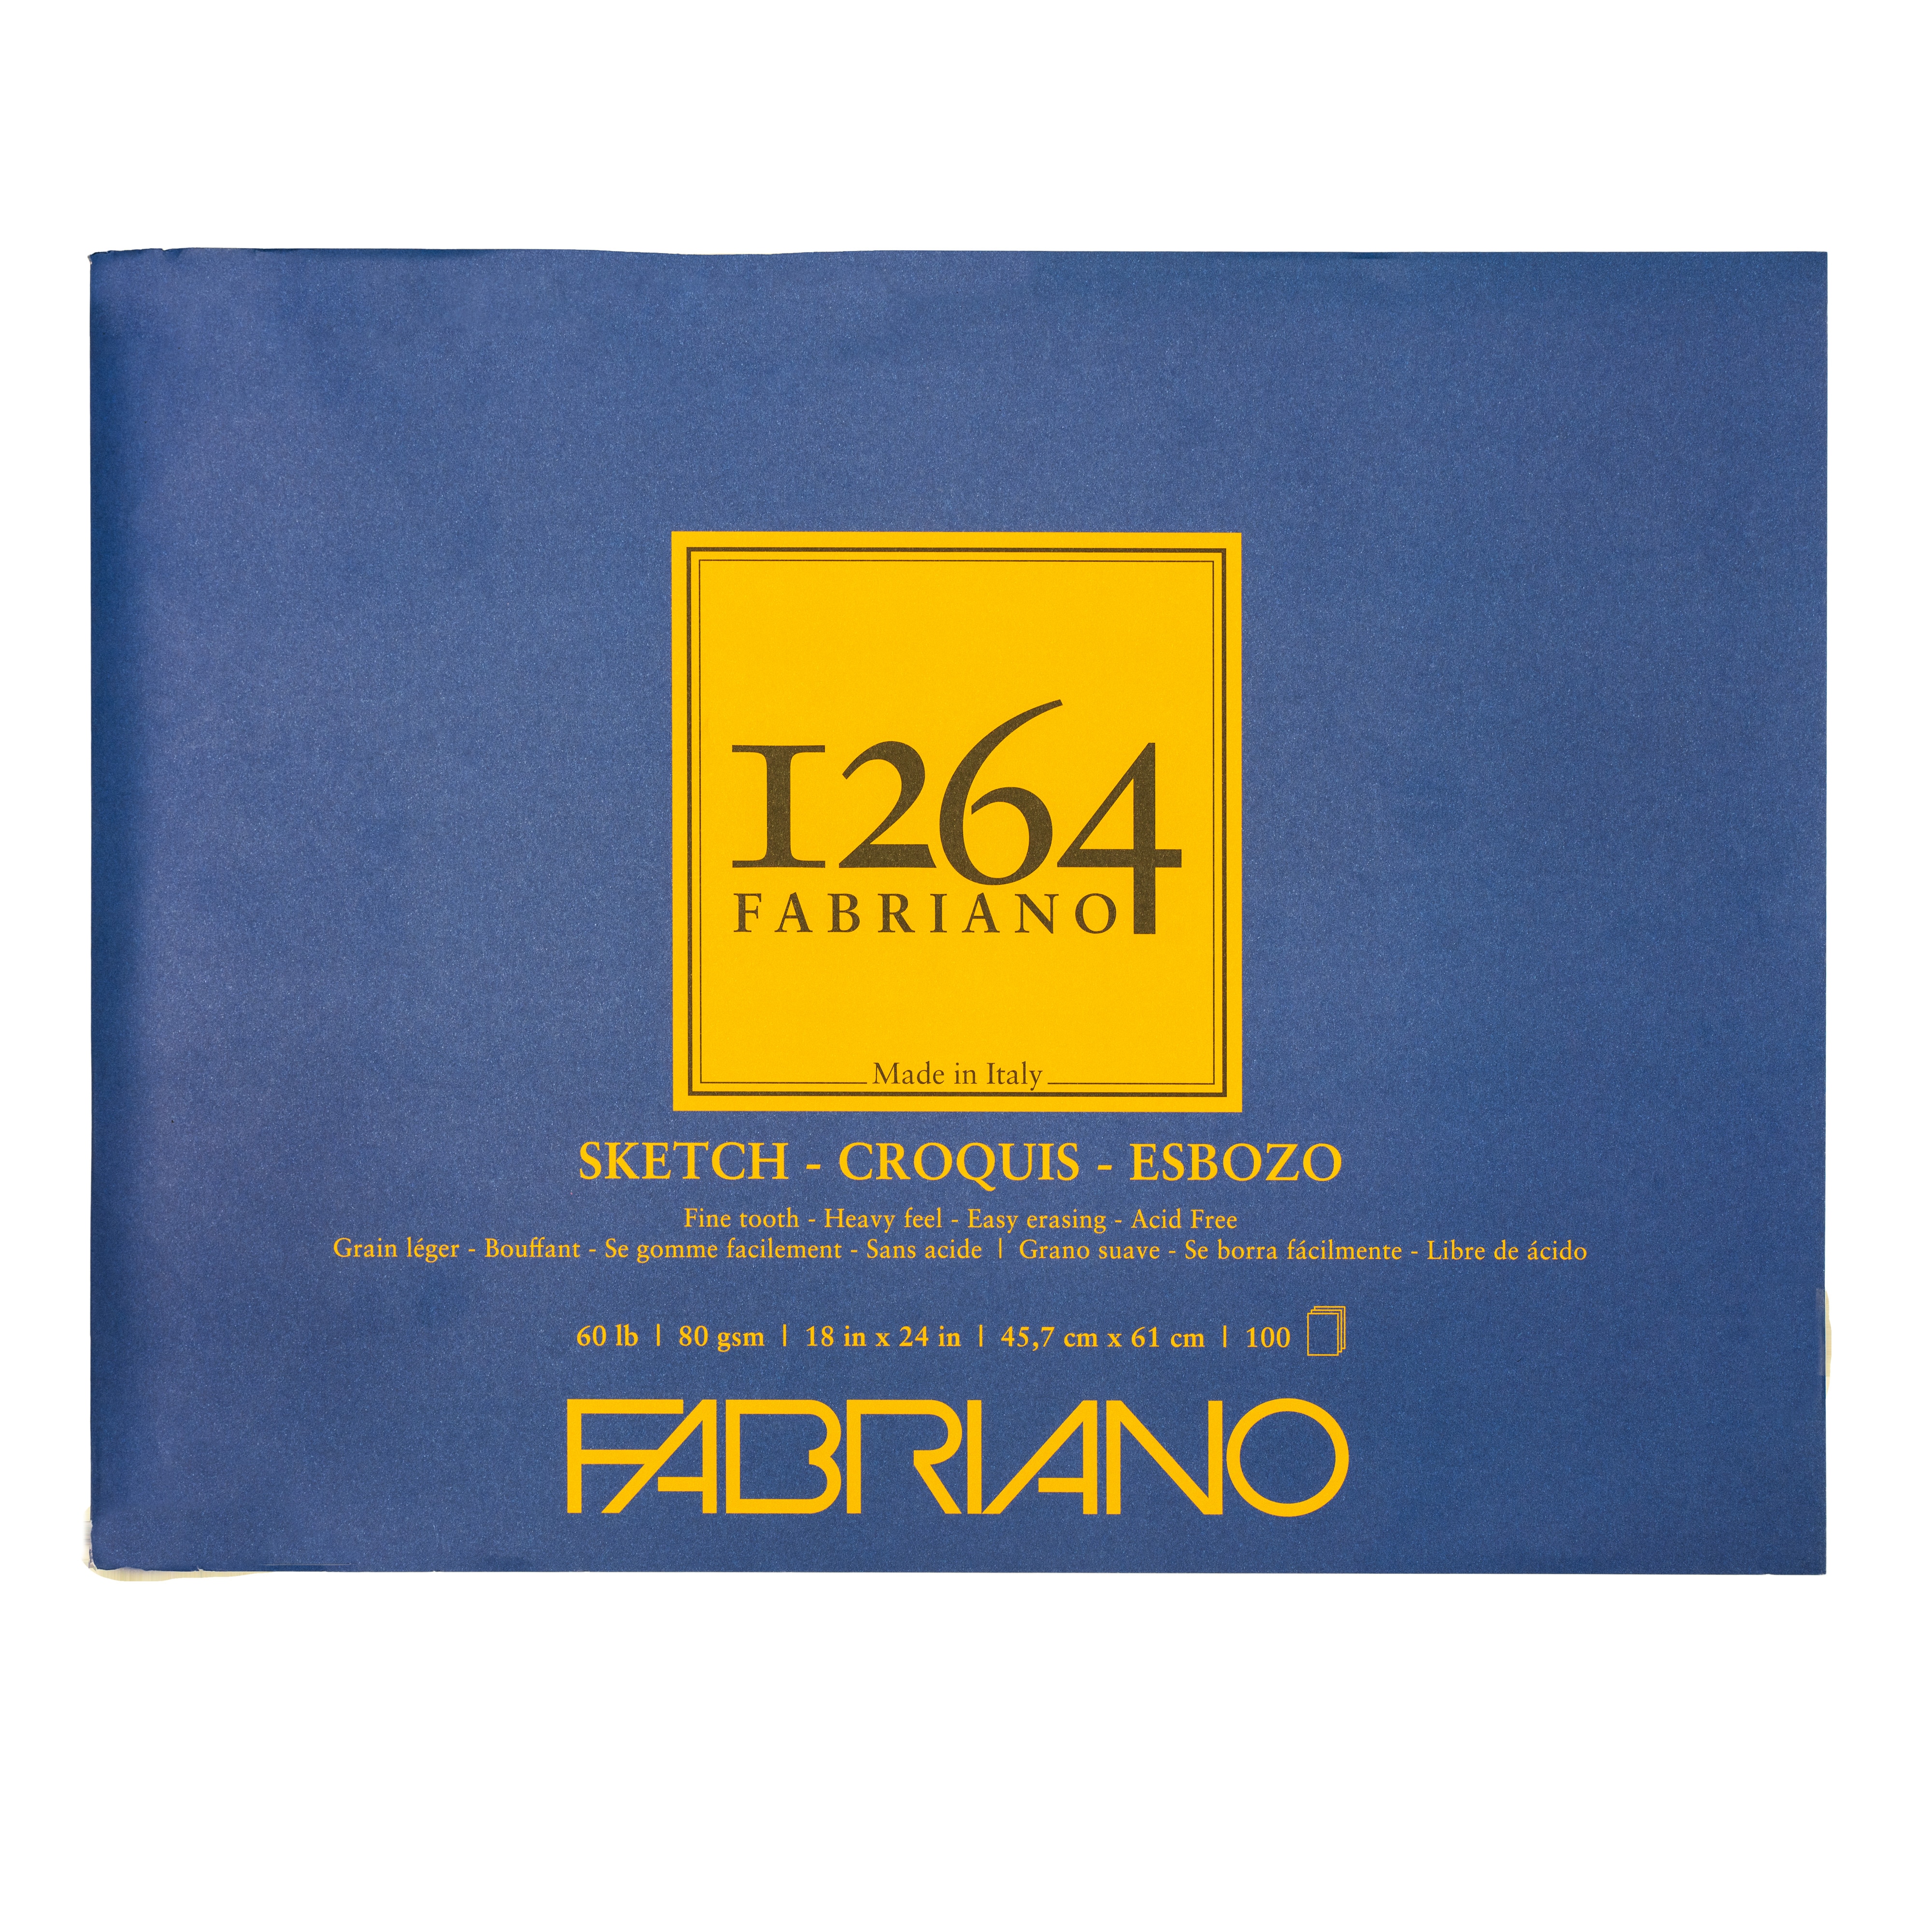 Fabriano 1264 Sketch Pad 18"x24"